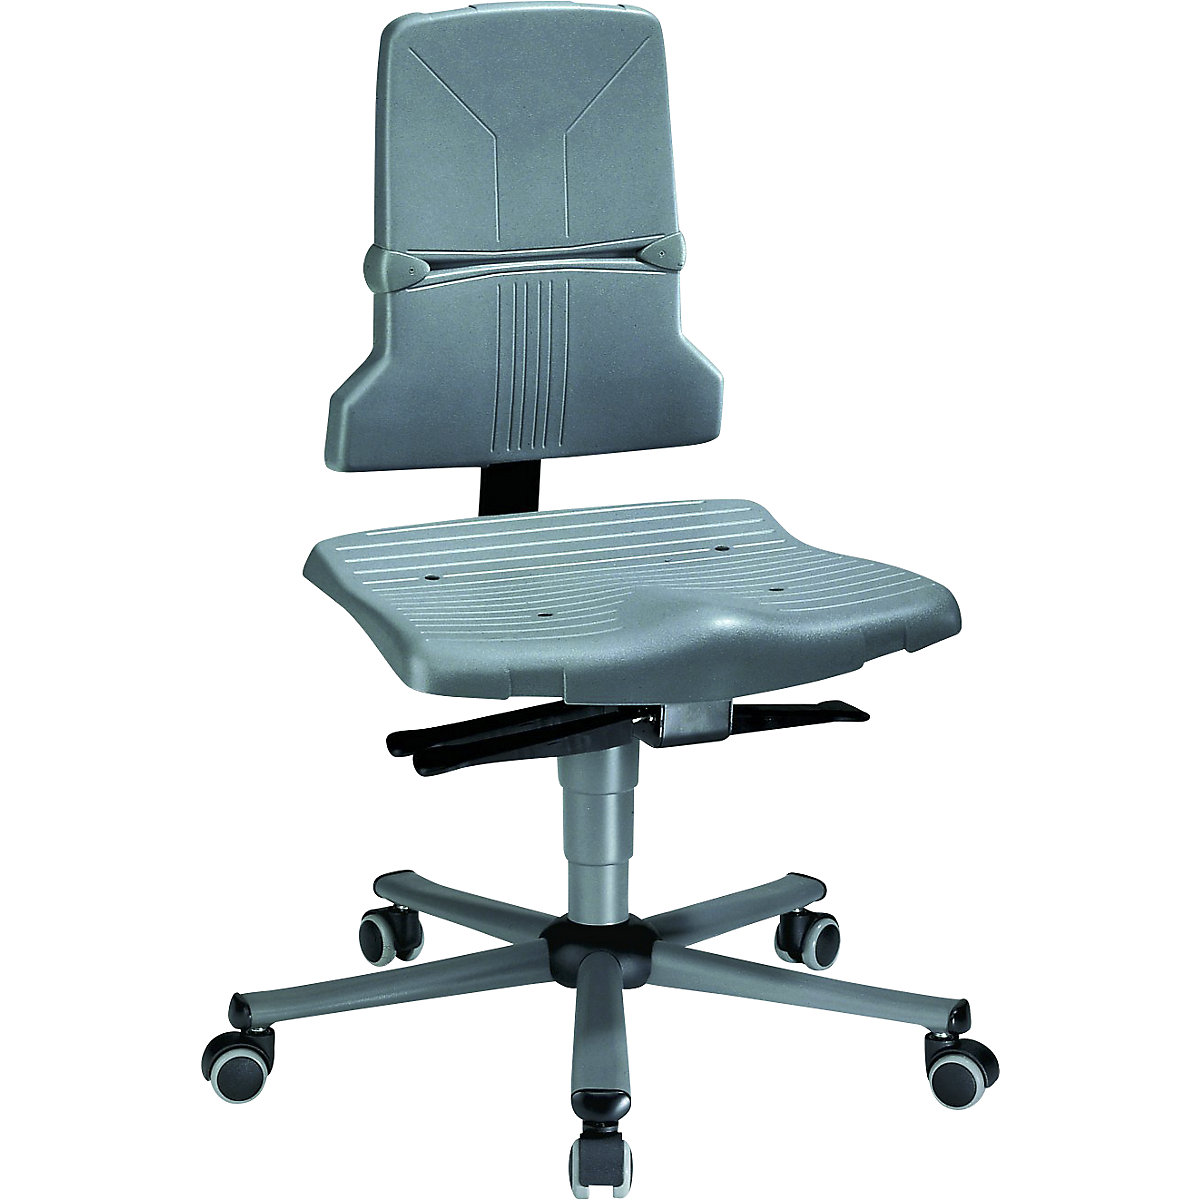 Pracovní otočná židle SINTEC - bimos